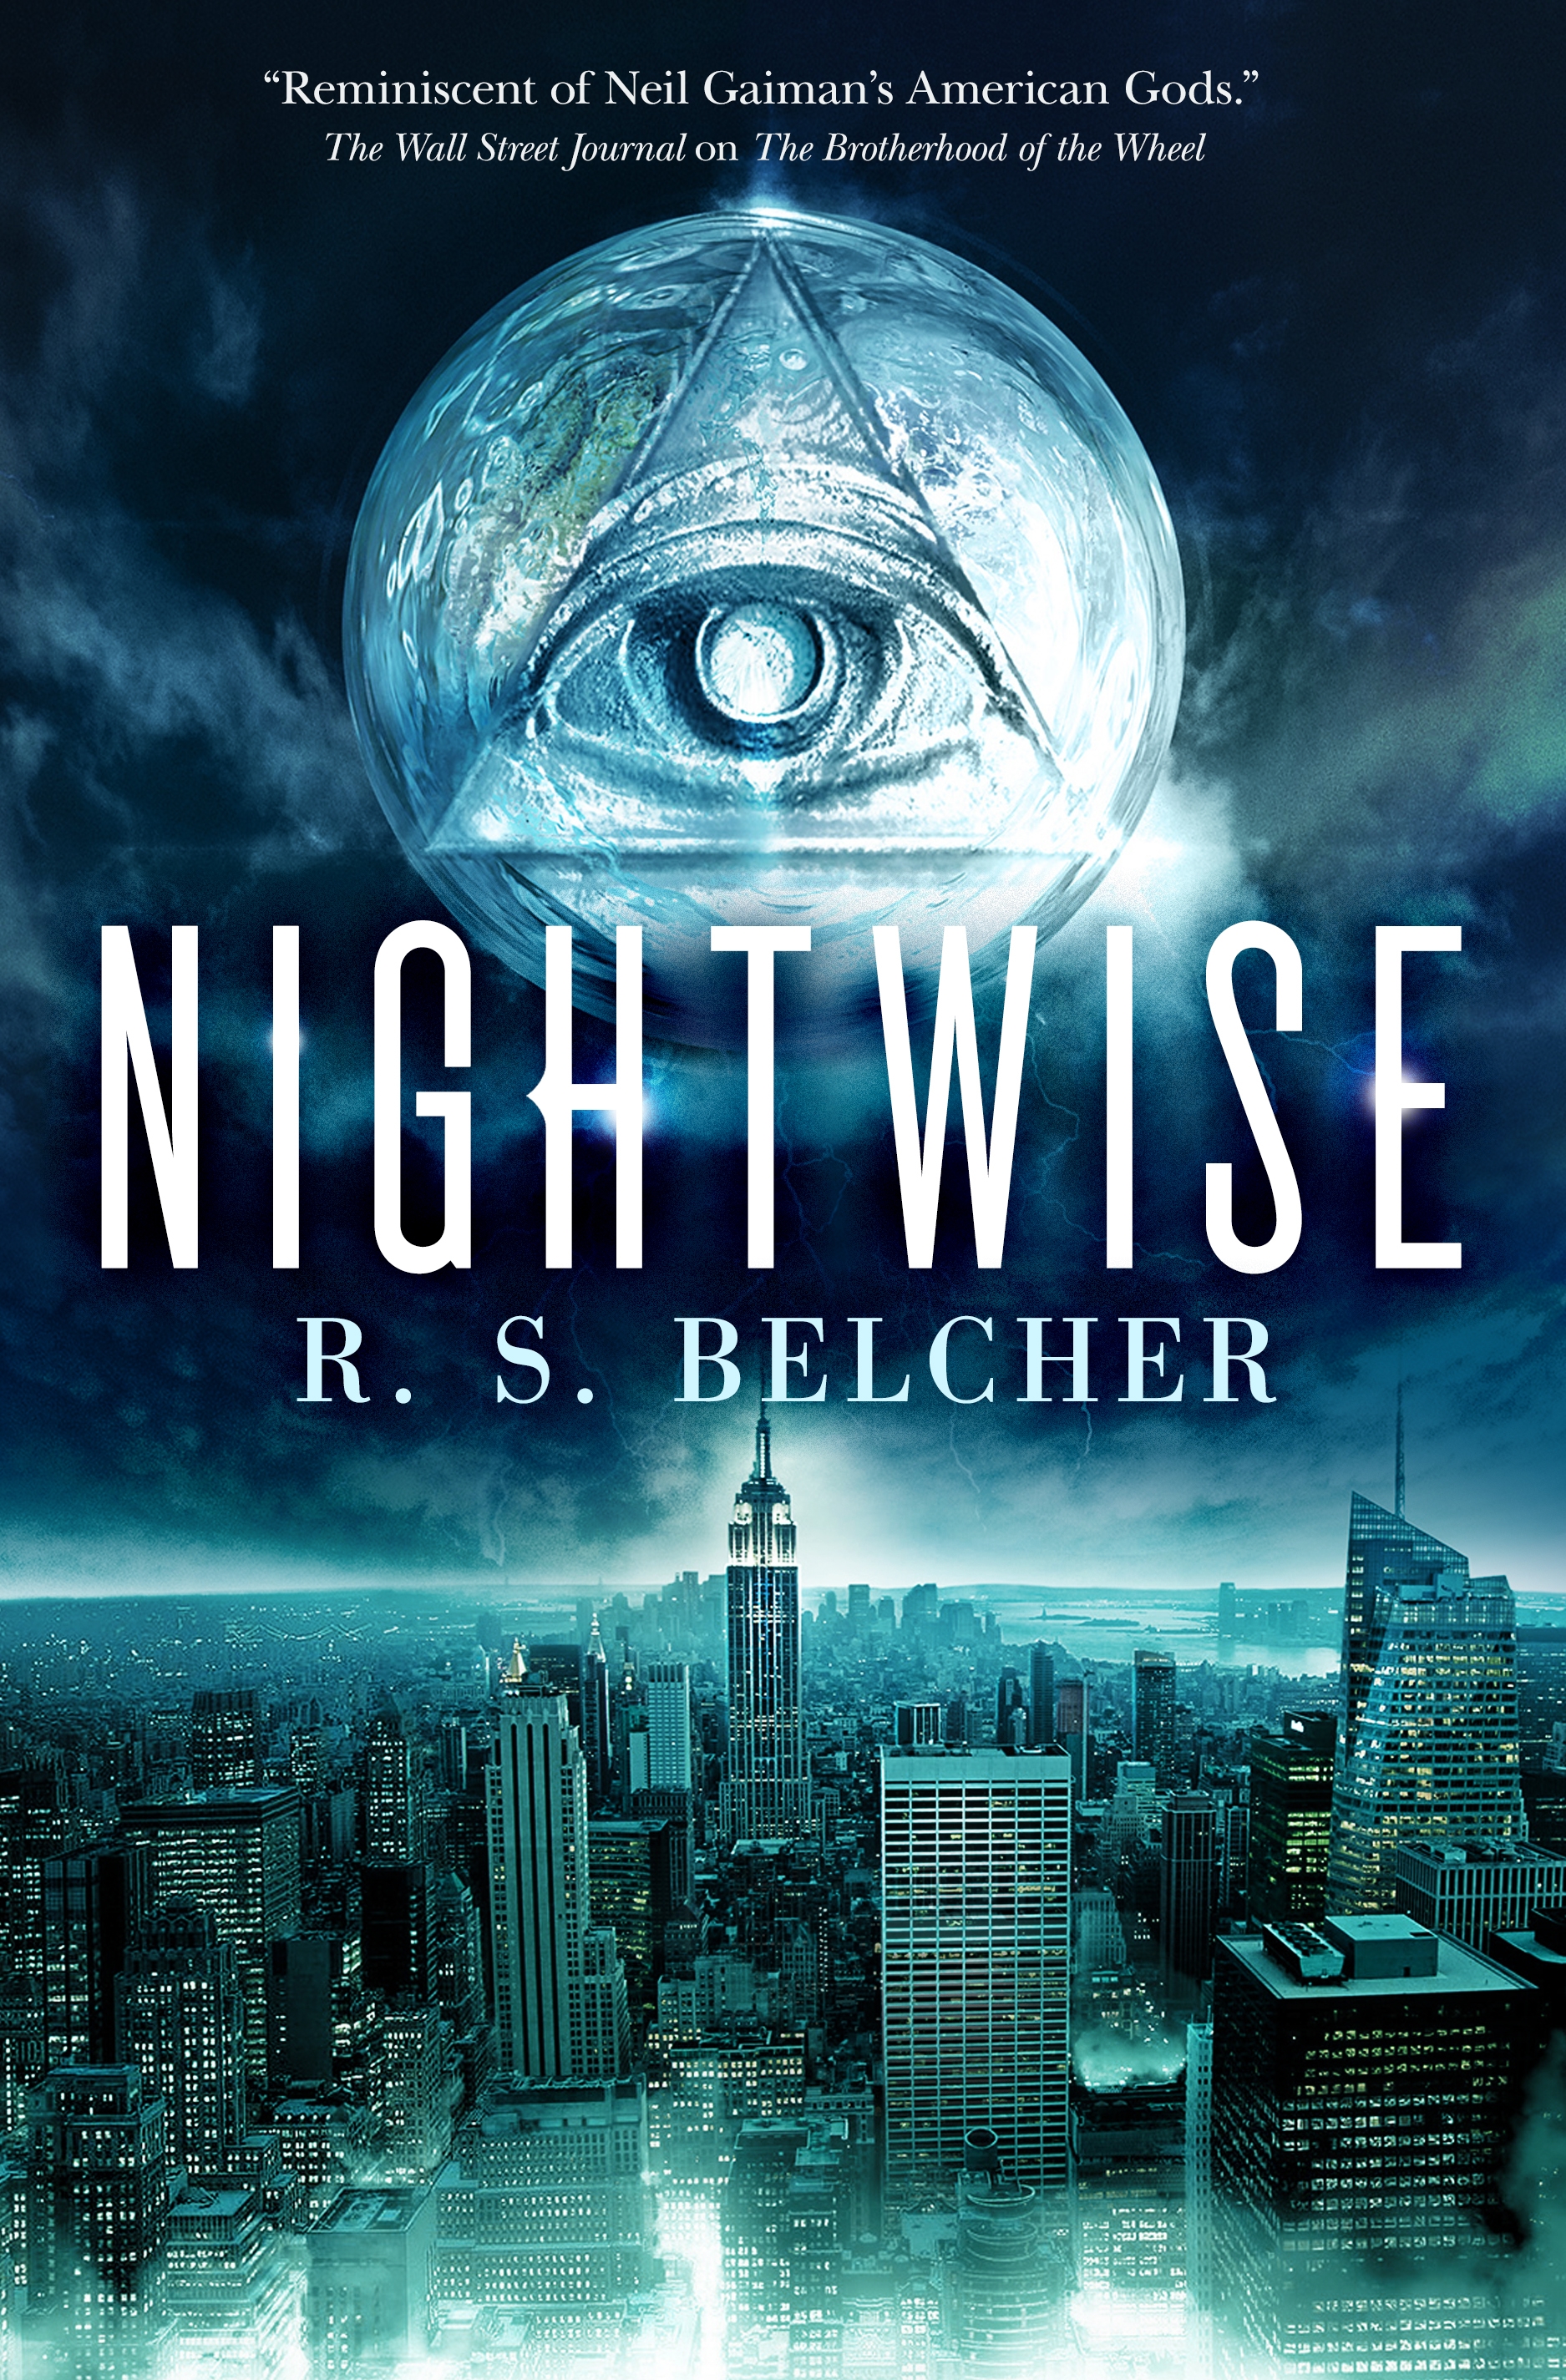 Nightwise by R. S. Belcher